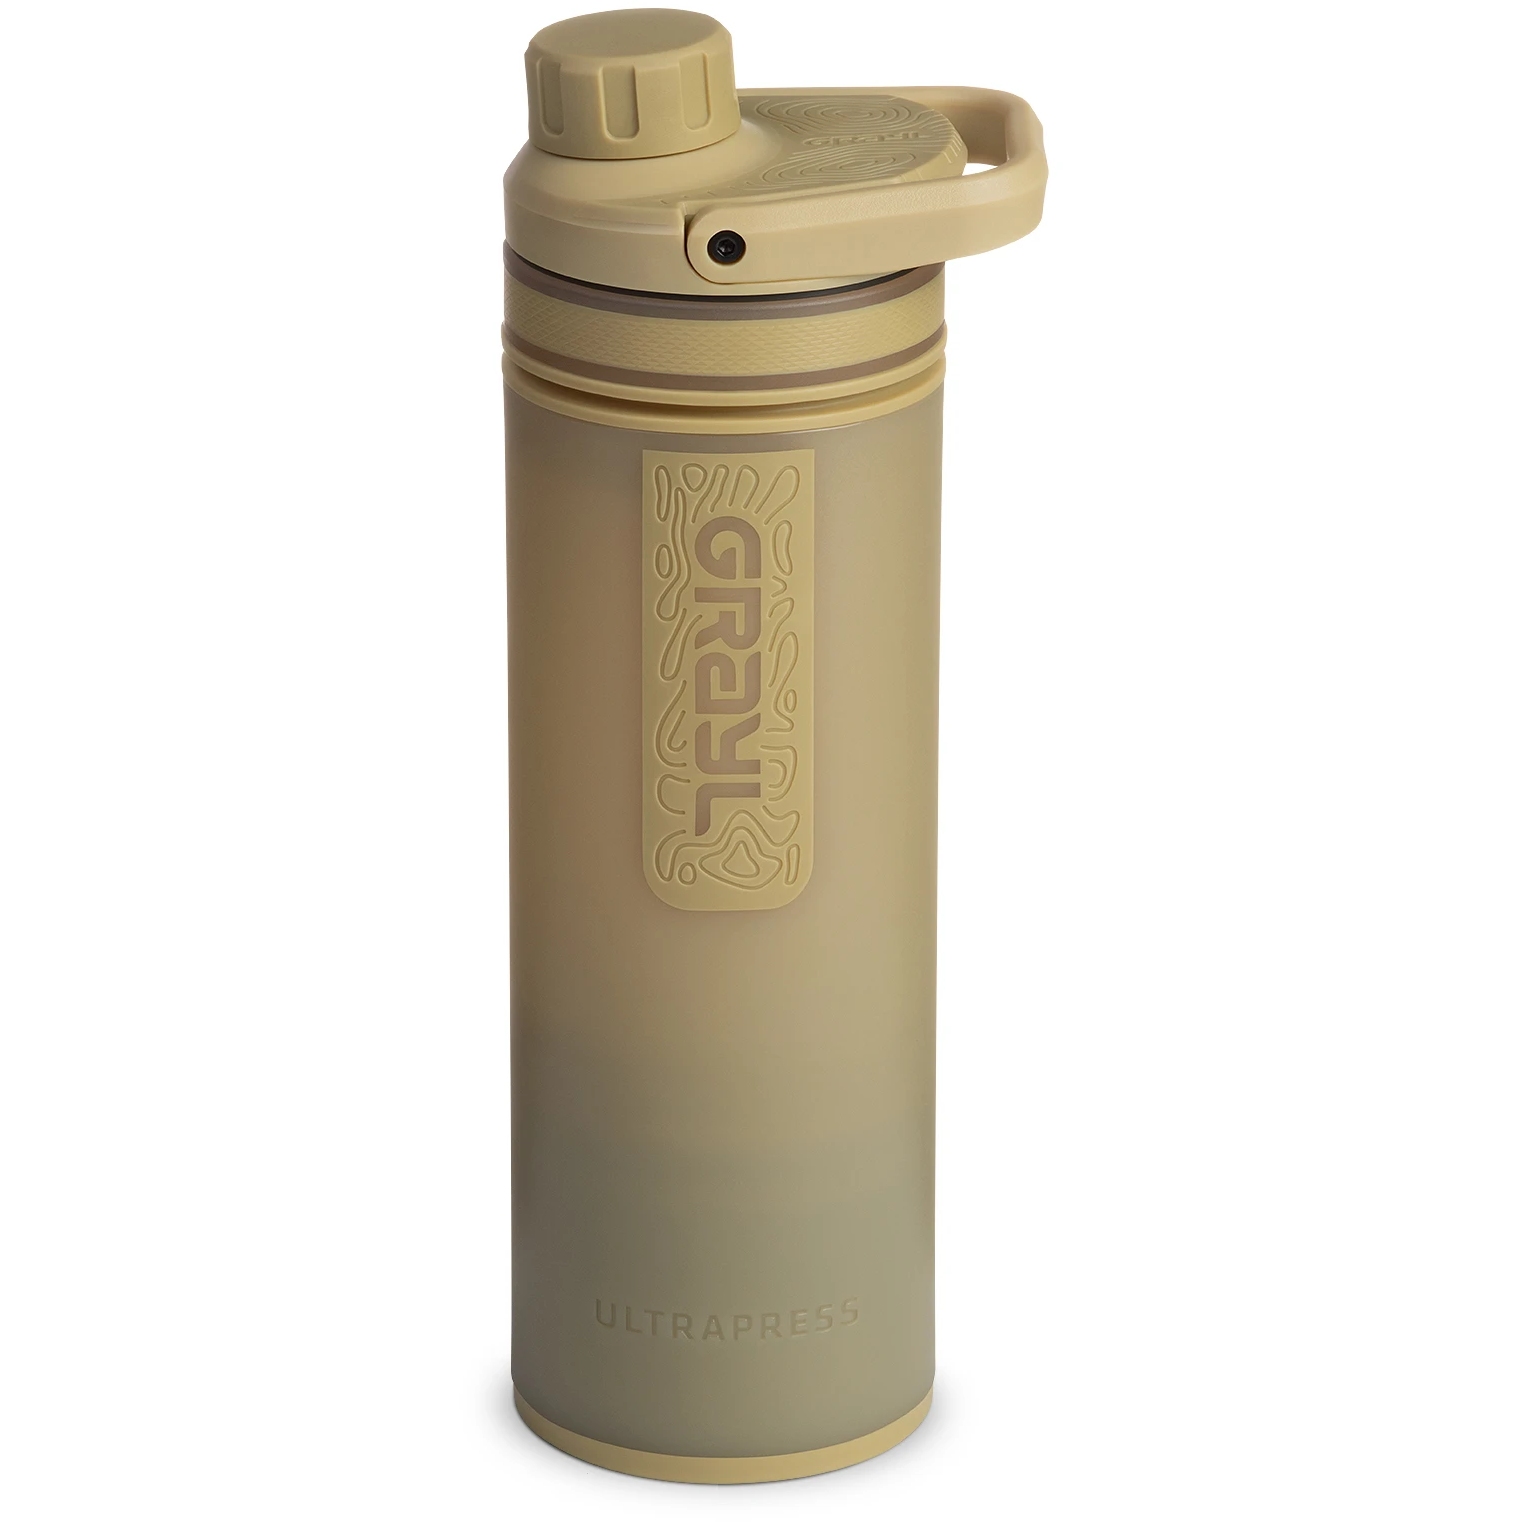 Productfoto van Grayl UltraPress Purifier Drinkfles met Waterfilter - 500ml - Desert Tan